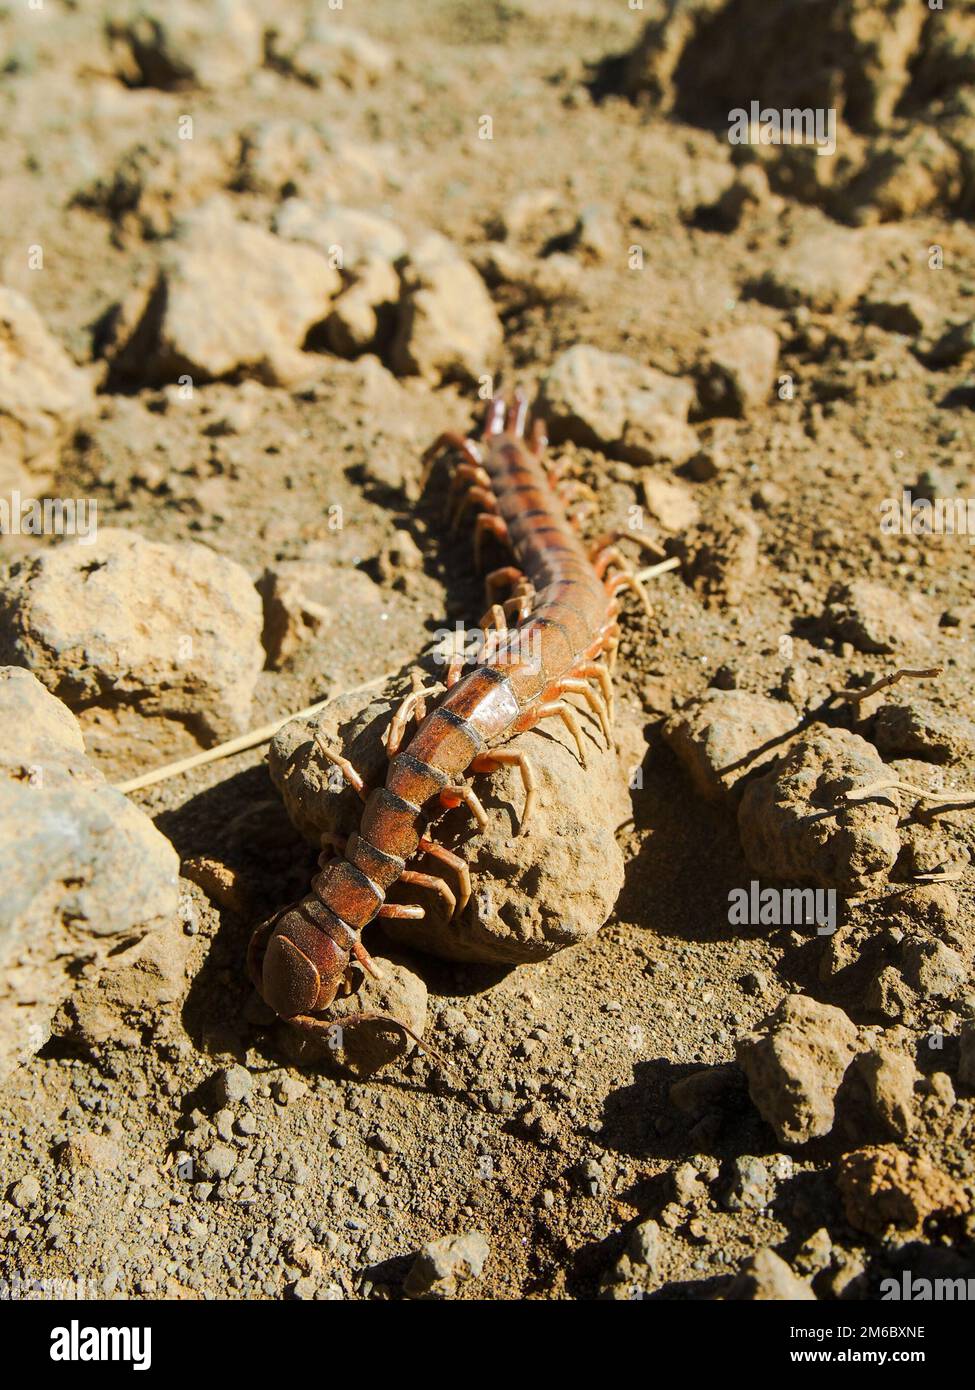 Red and Black Scolopendra Centipede Stock Photo